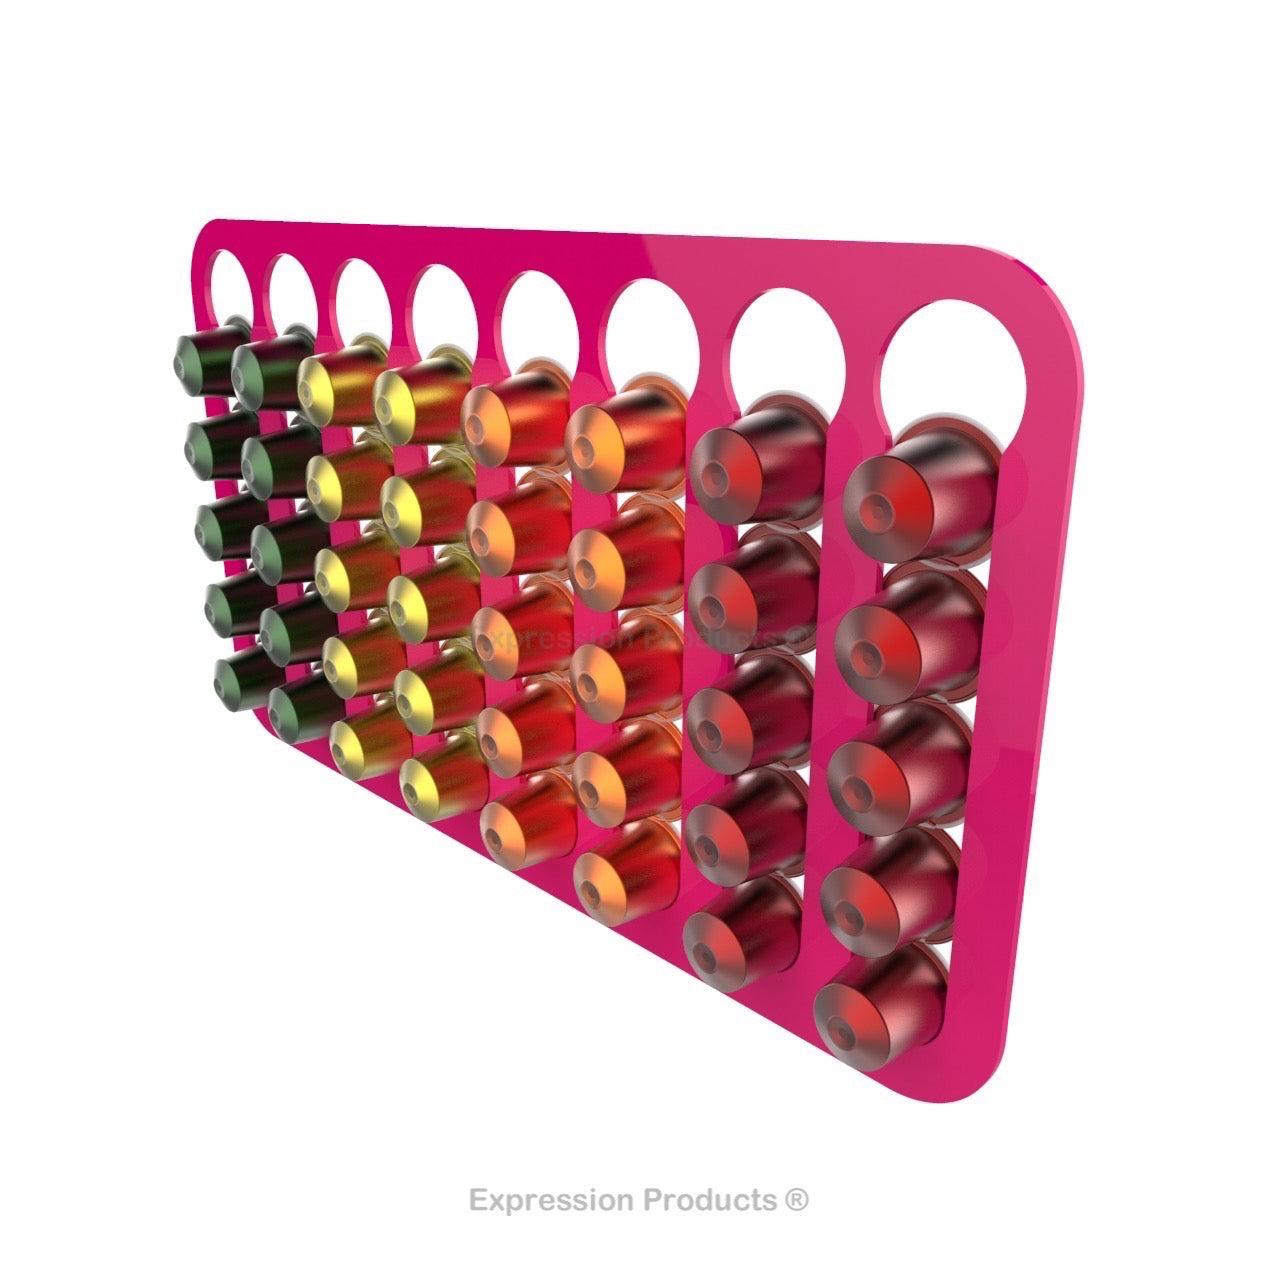 Magnetic Nespresso Original Line coffee pod holder shown in pink holding 40 pods